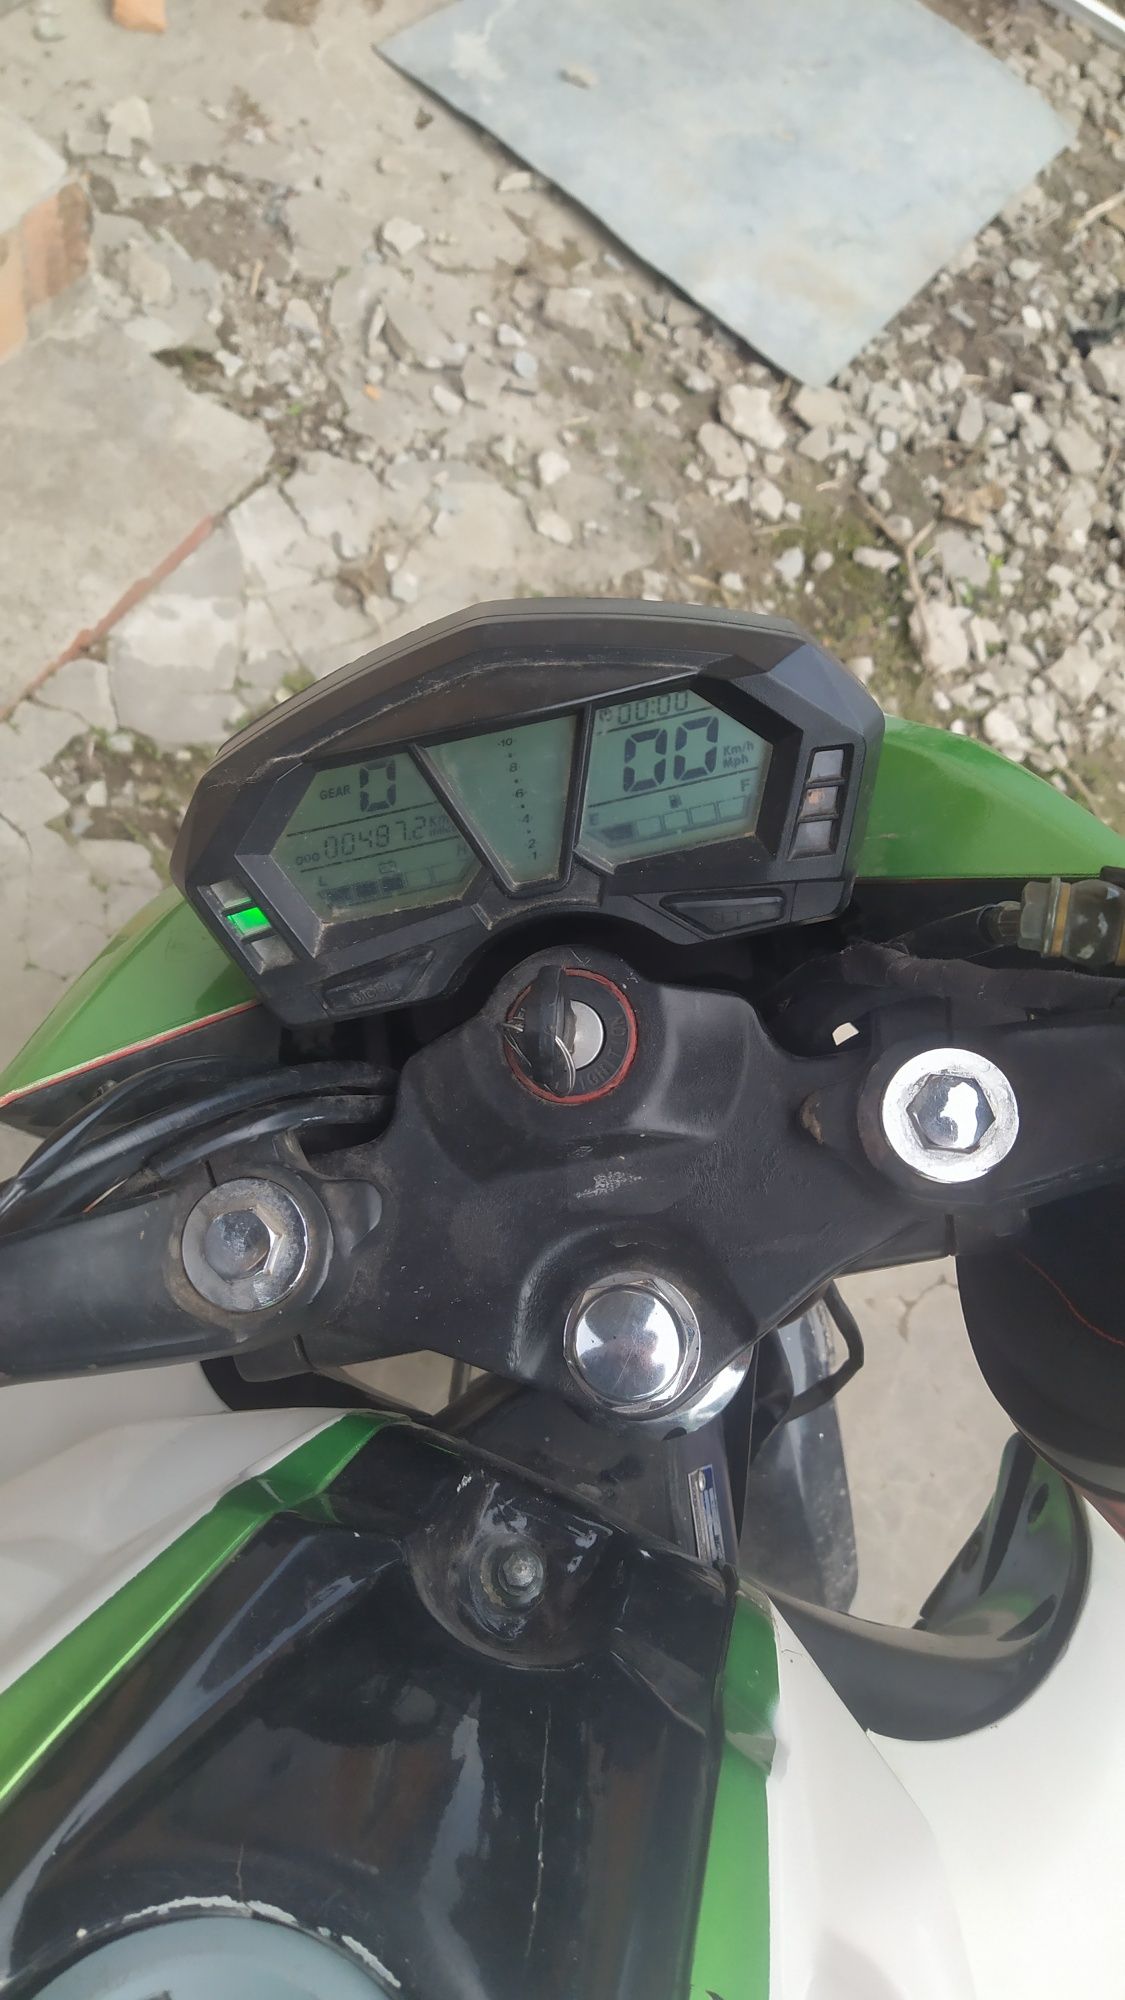 Viper r1 nk Мотоцикл 250 cc